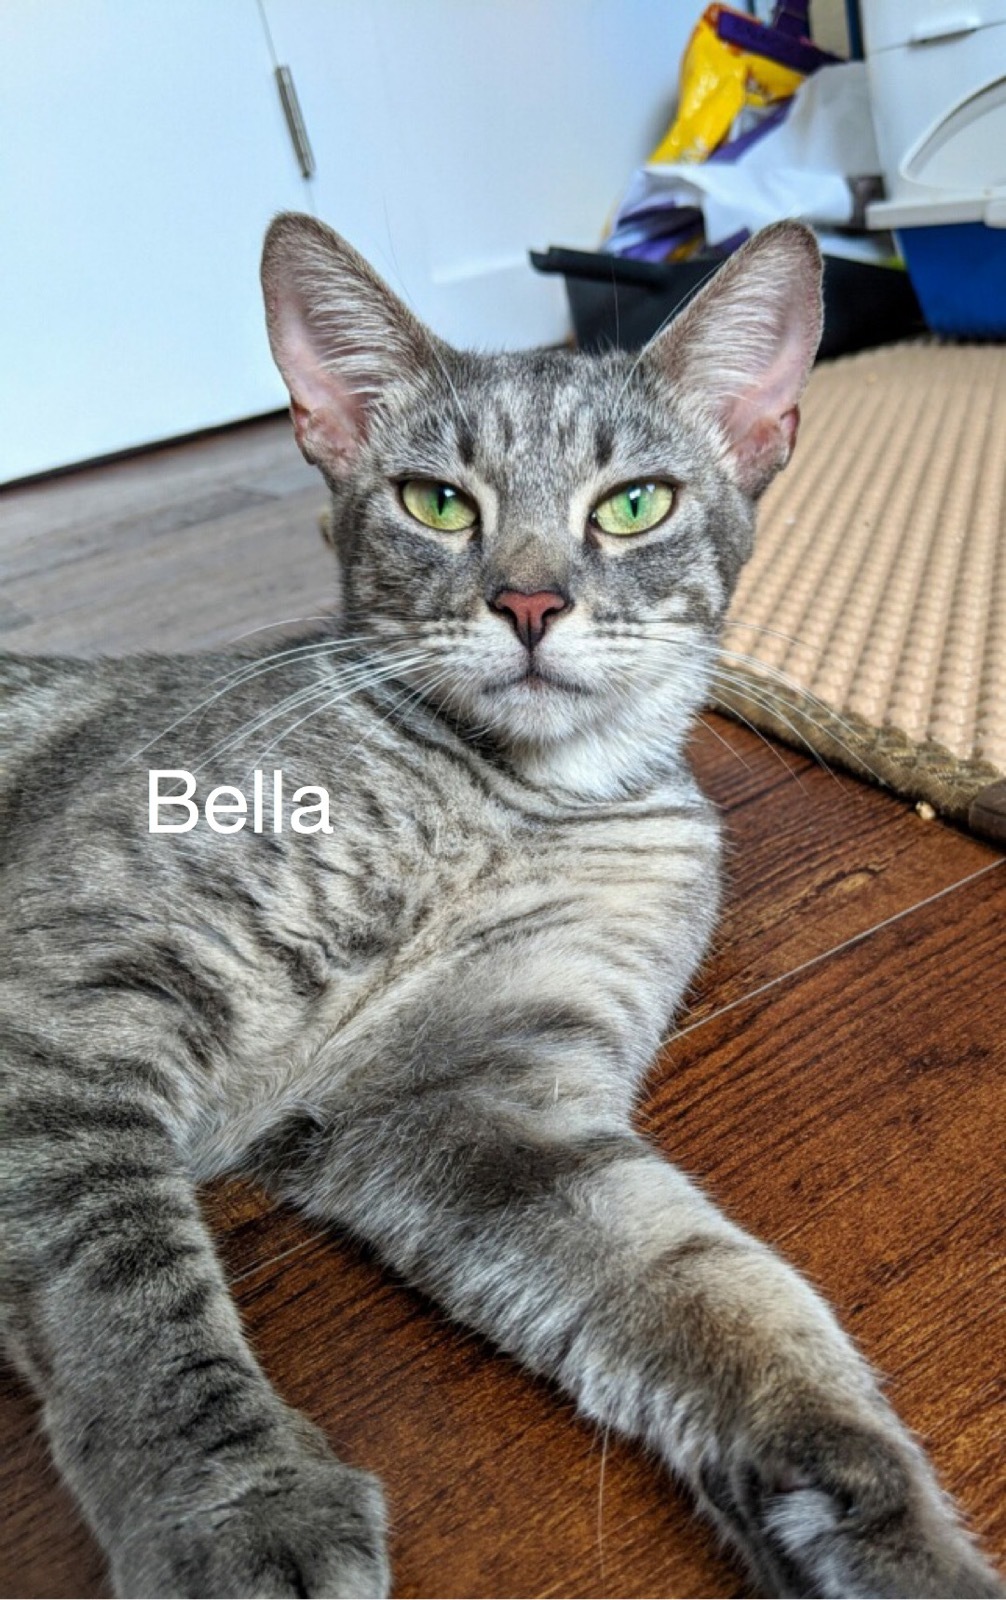 Bella detail page